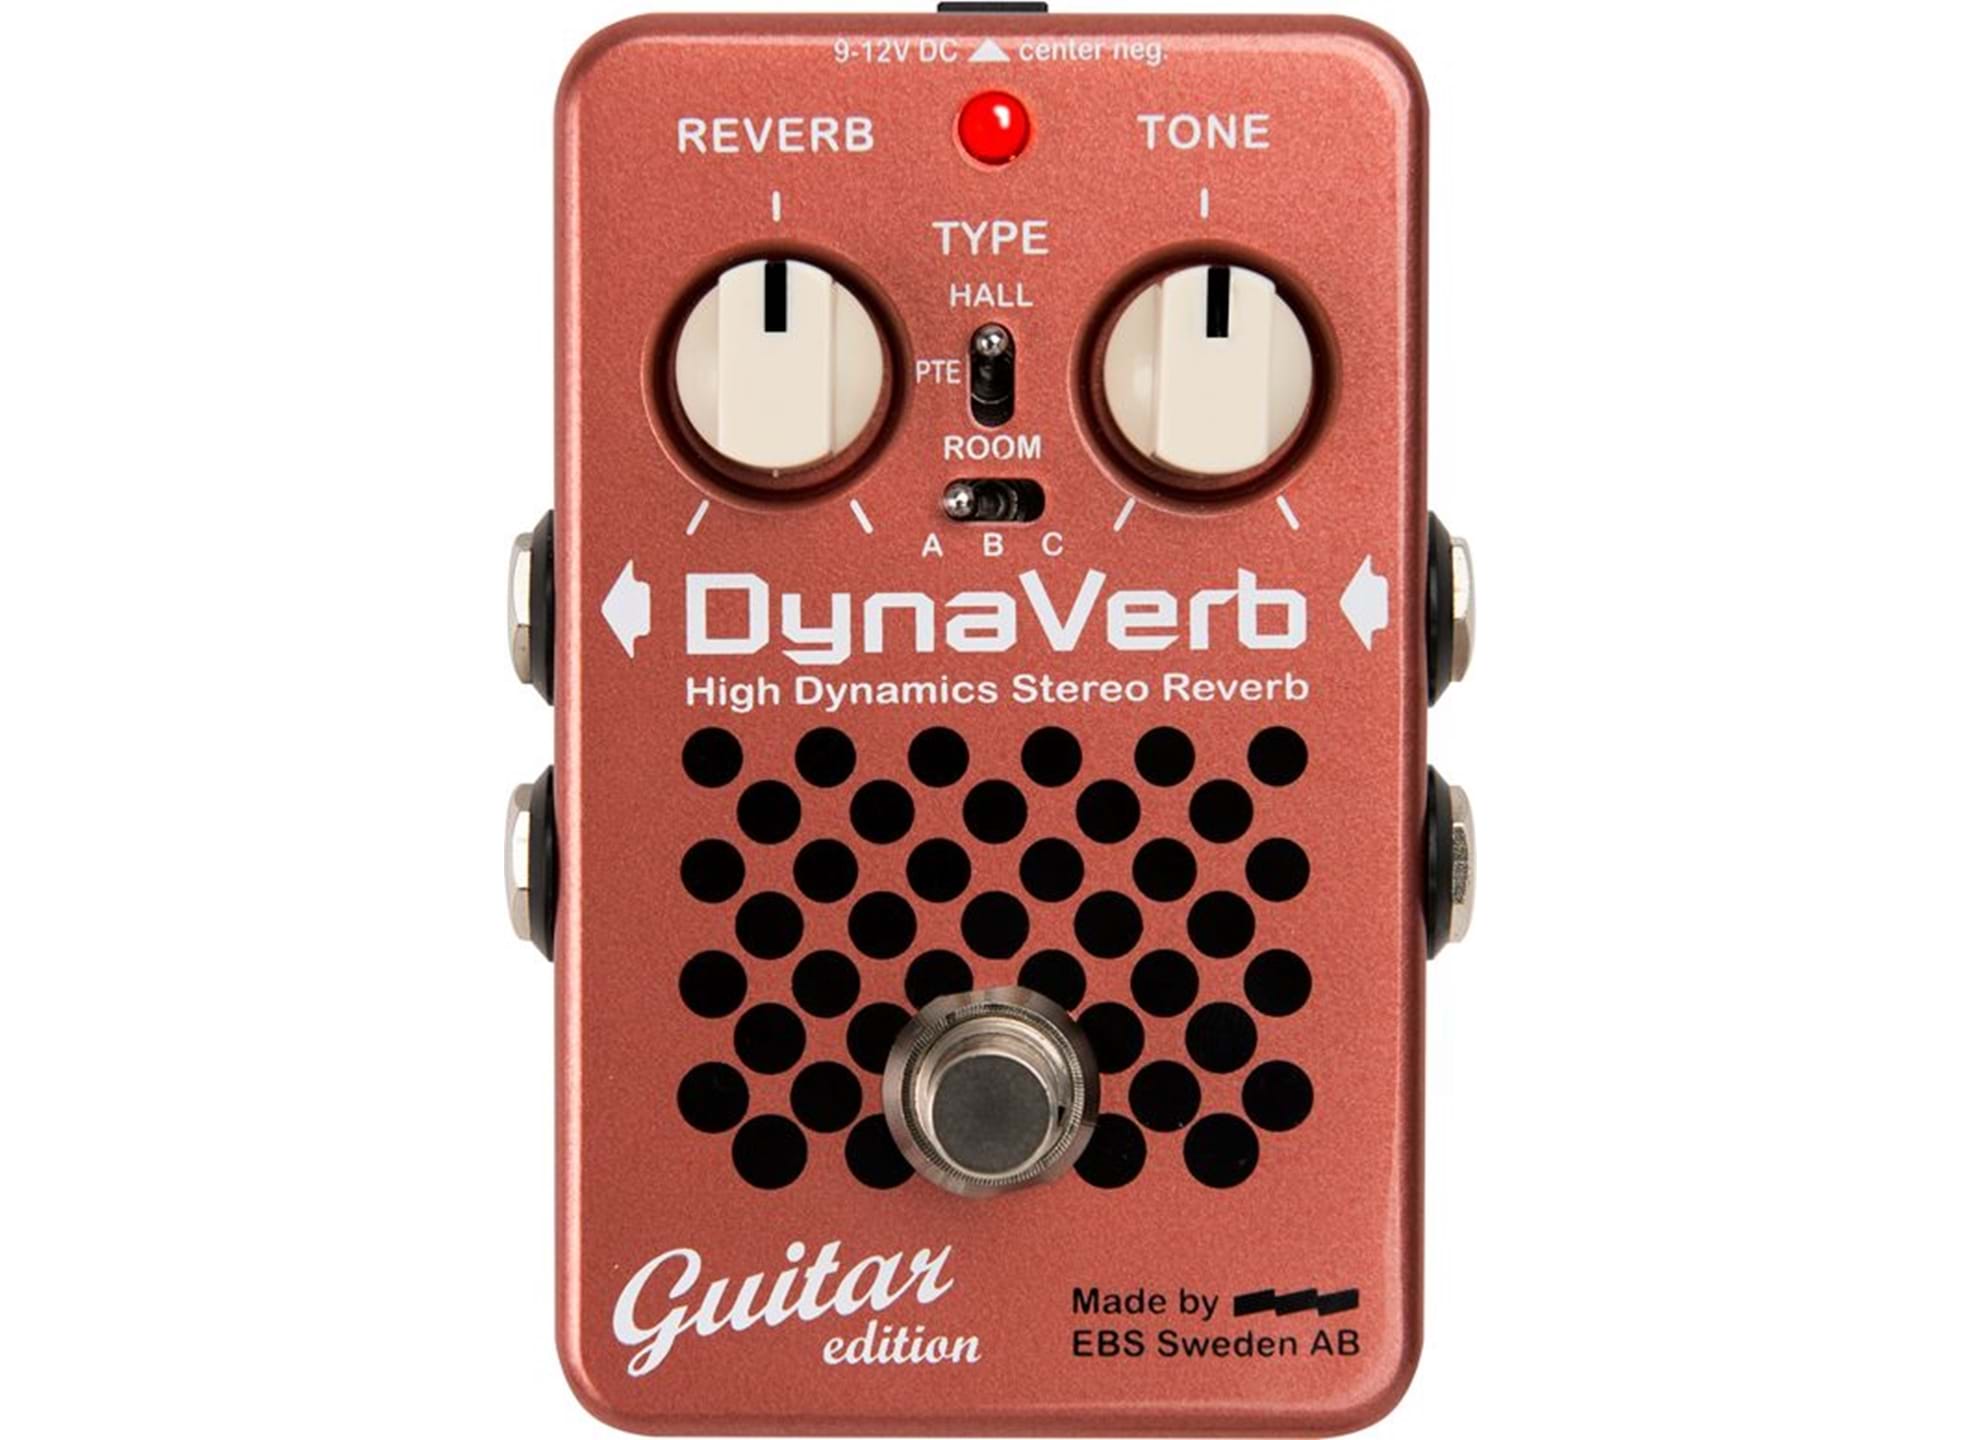 DynaVerb Guitar Edition